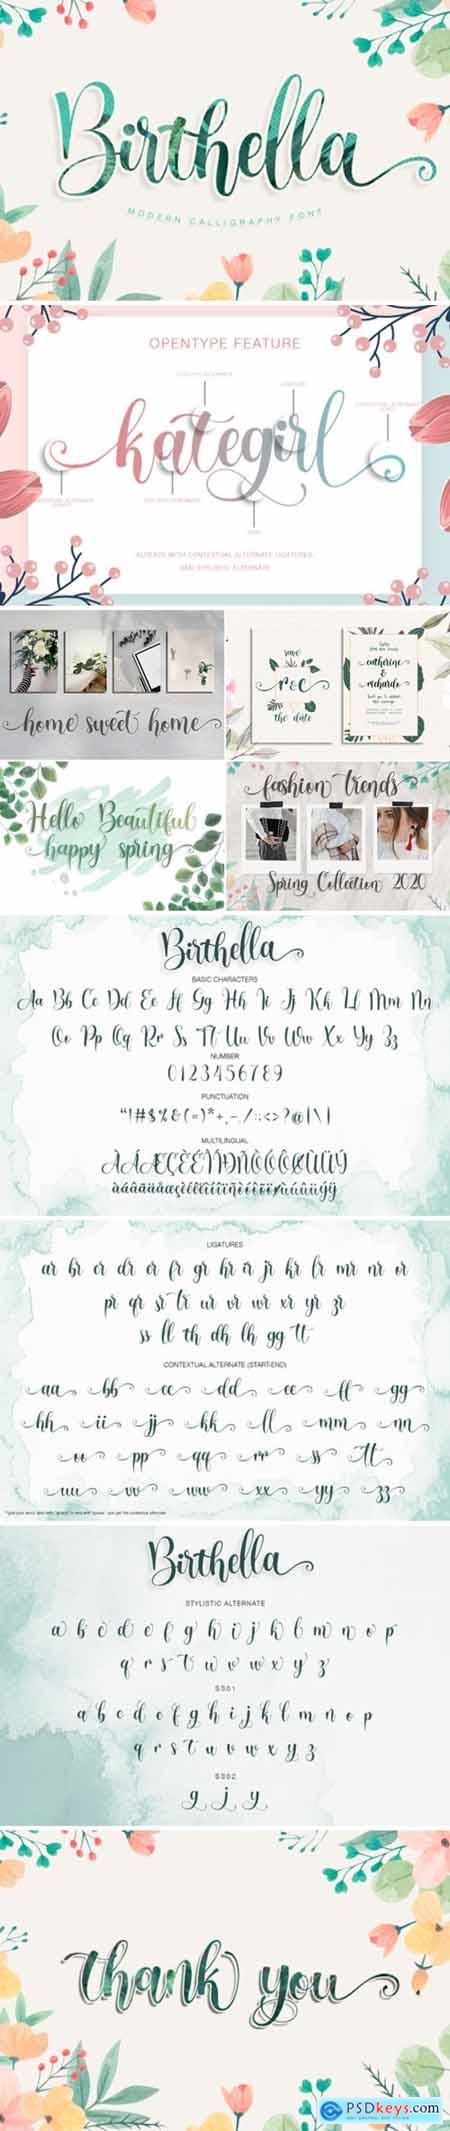 Birthella -- Modern Calligraphy 518084